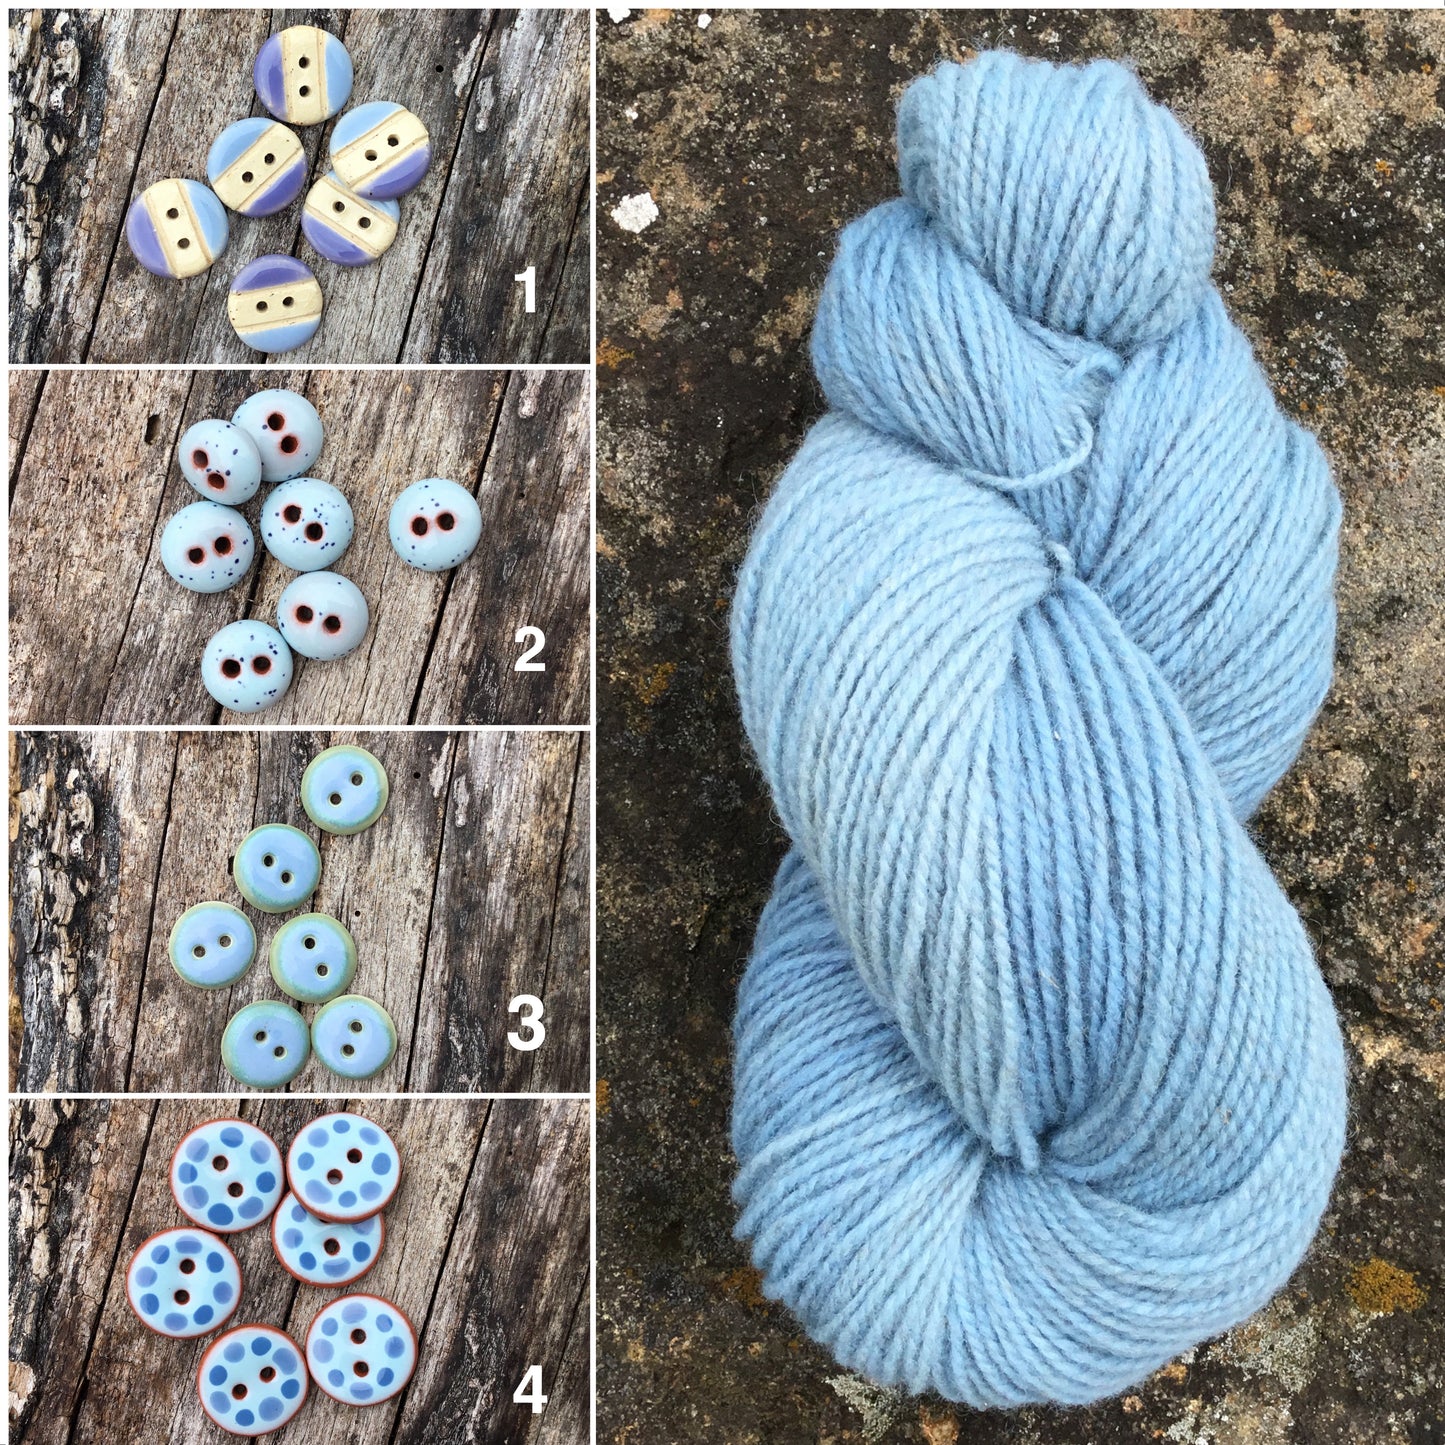 Soft Blue - DK Wool Yarn (80Merino 20Romney) 2 ply - 4 oz skeins